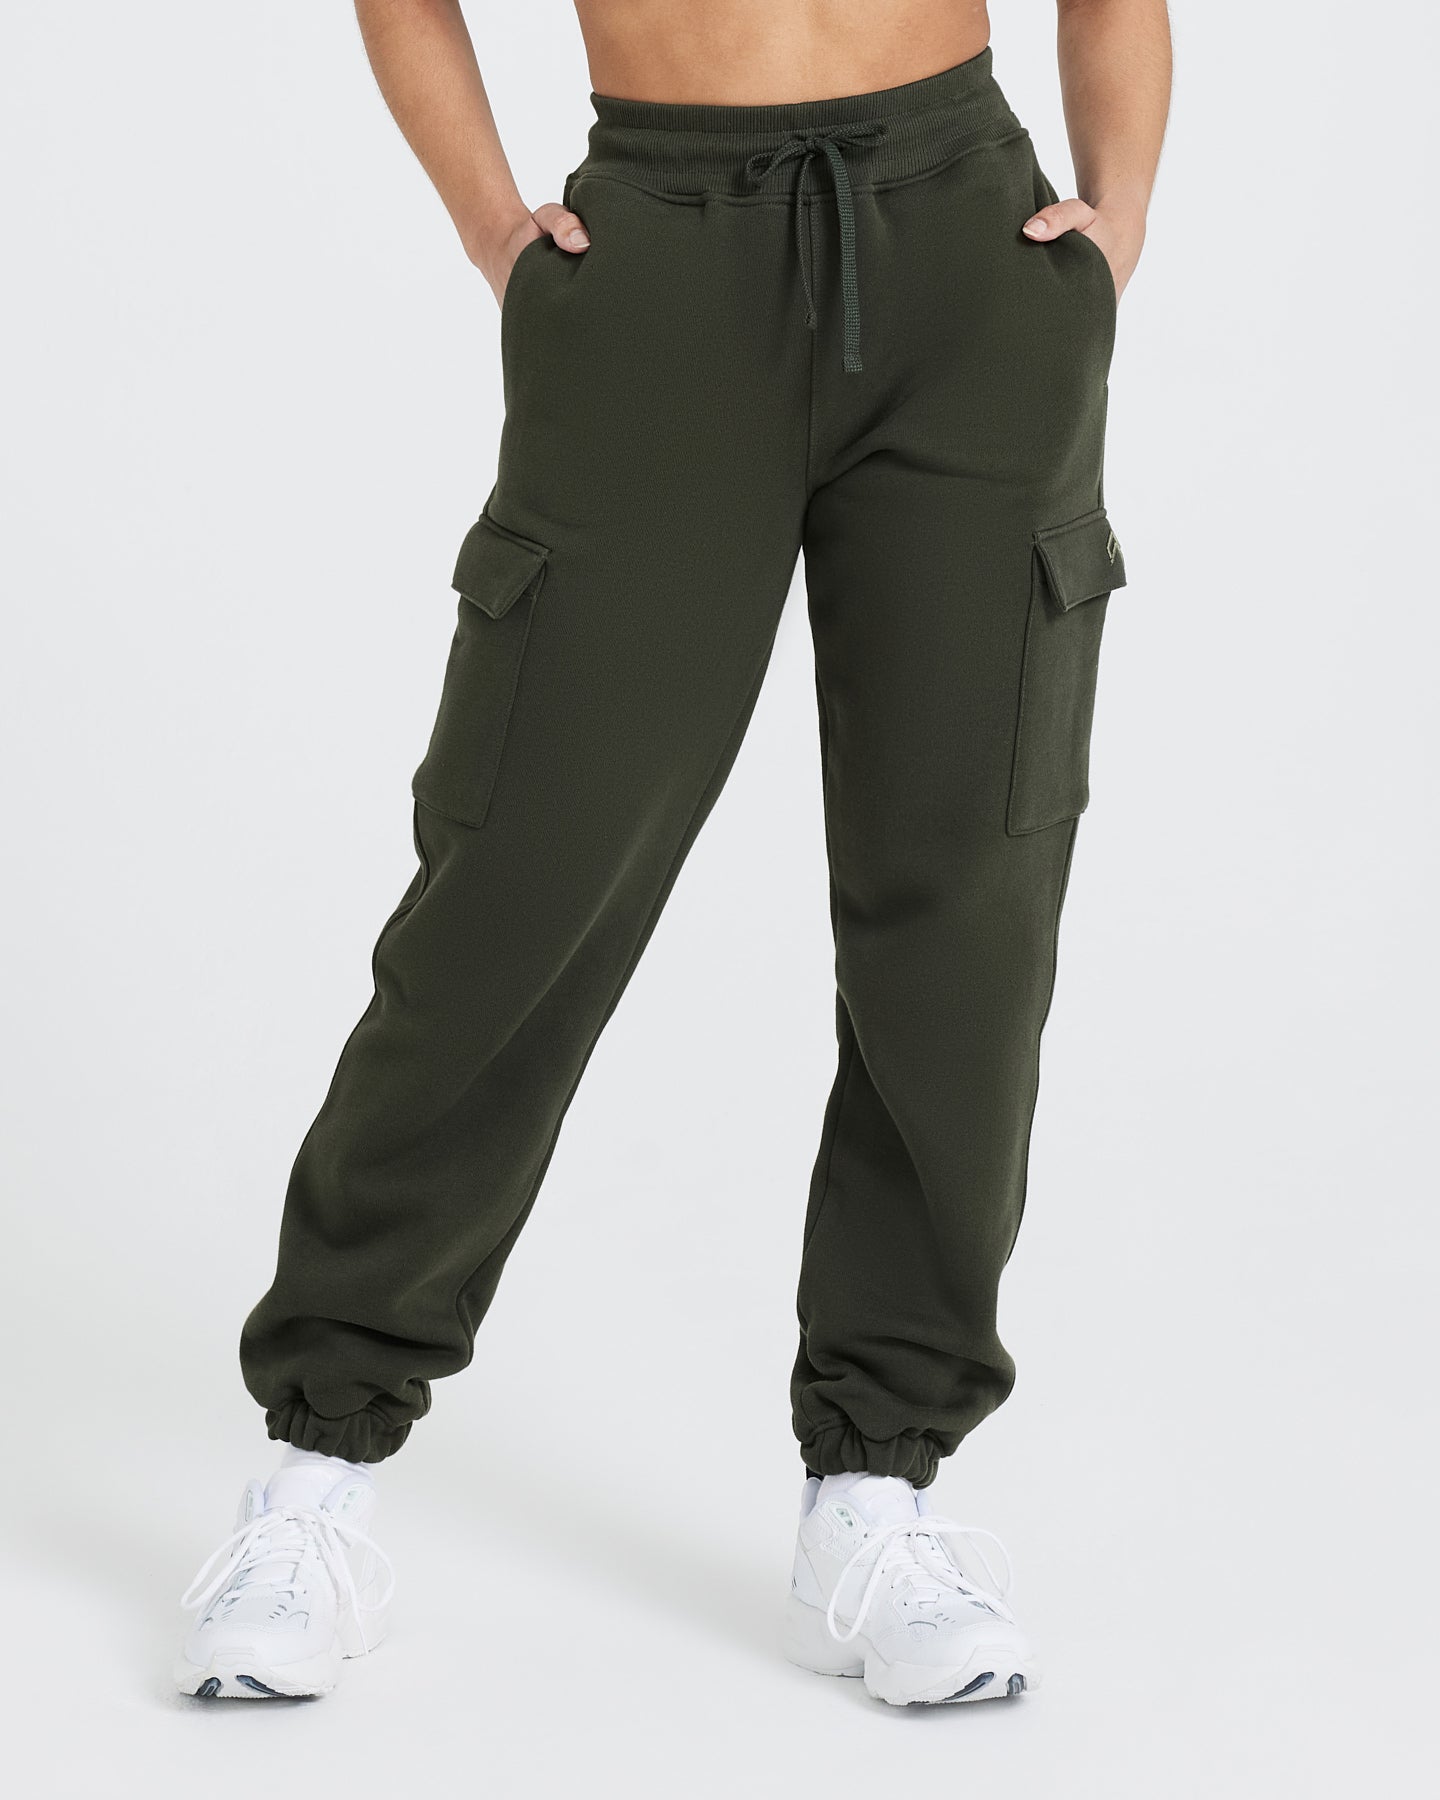 Khaki Joggers Women - Front Zip Pockets | Oner Active US